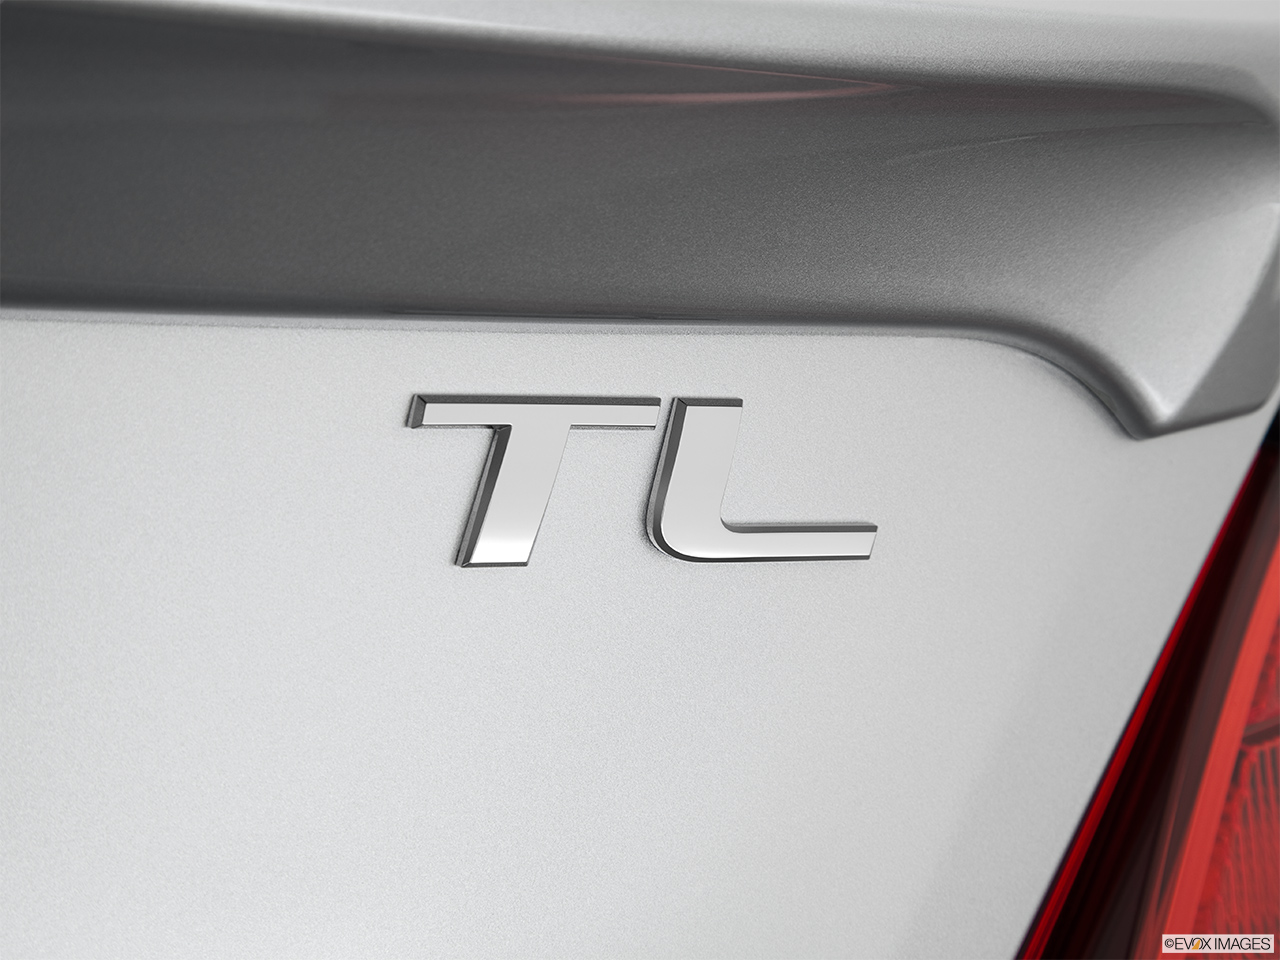 2014 Acura TL Special Edition Rear model badge/emblem 